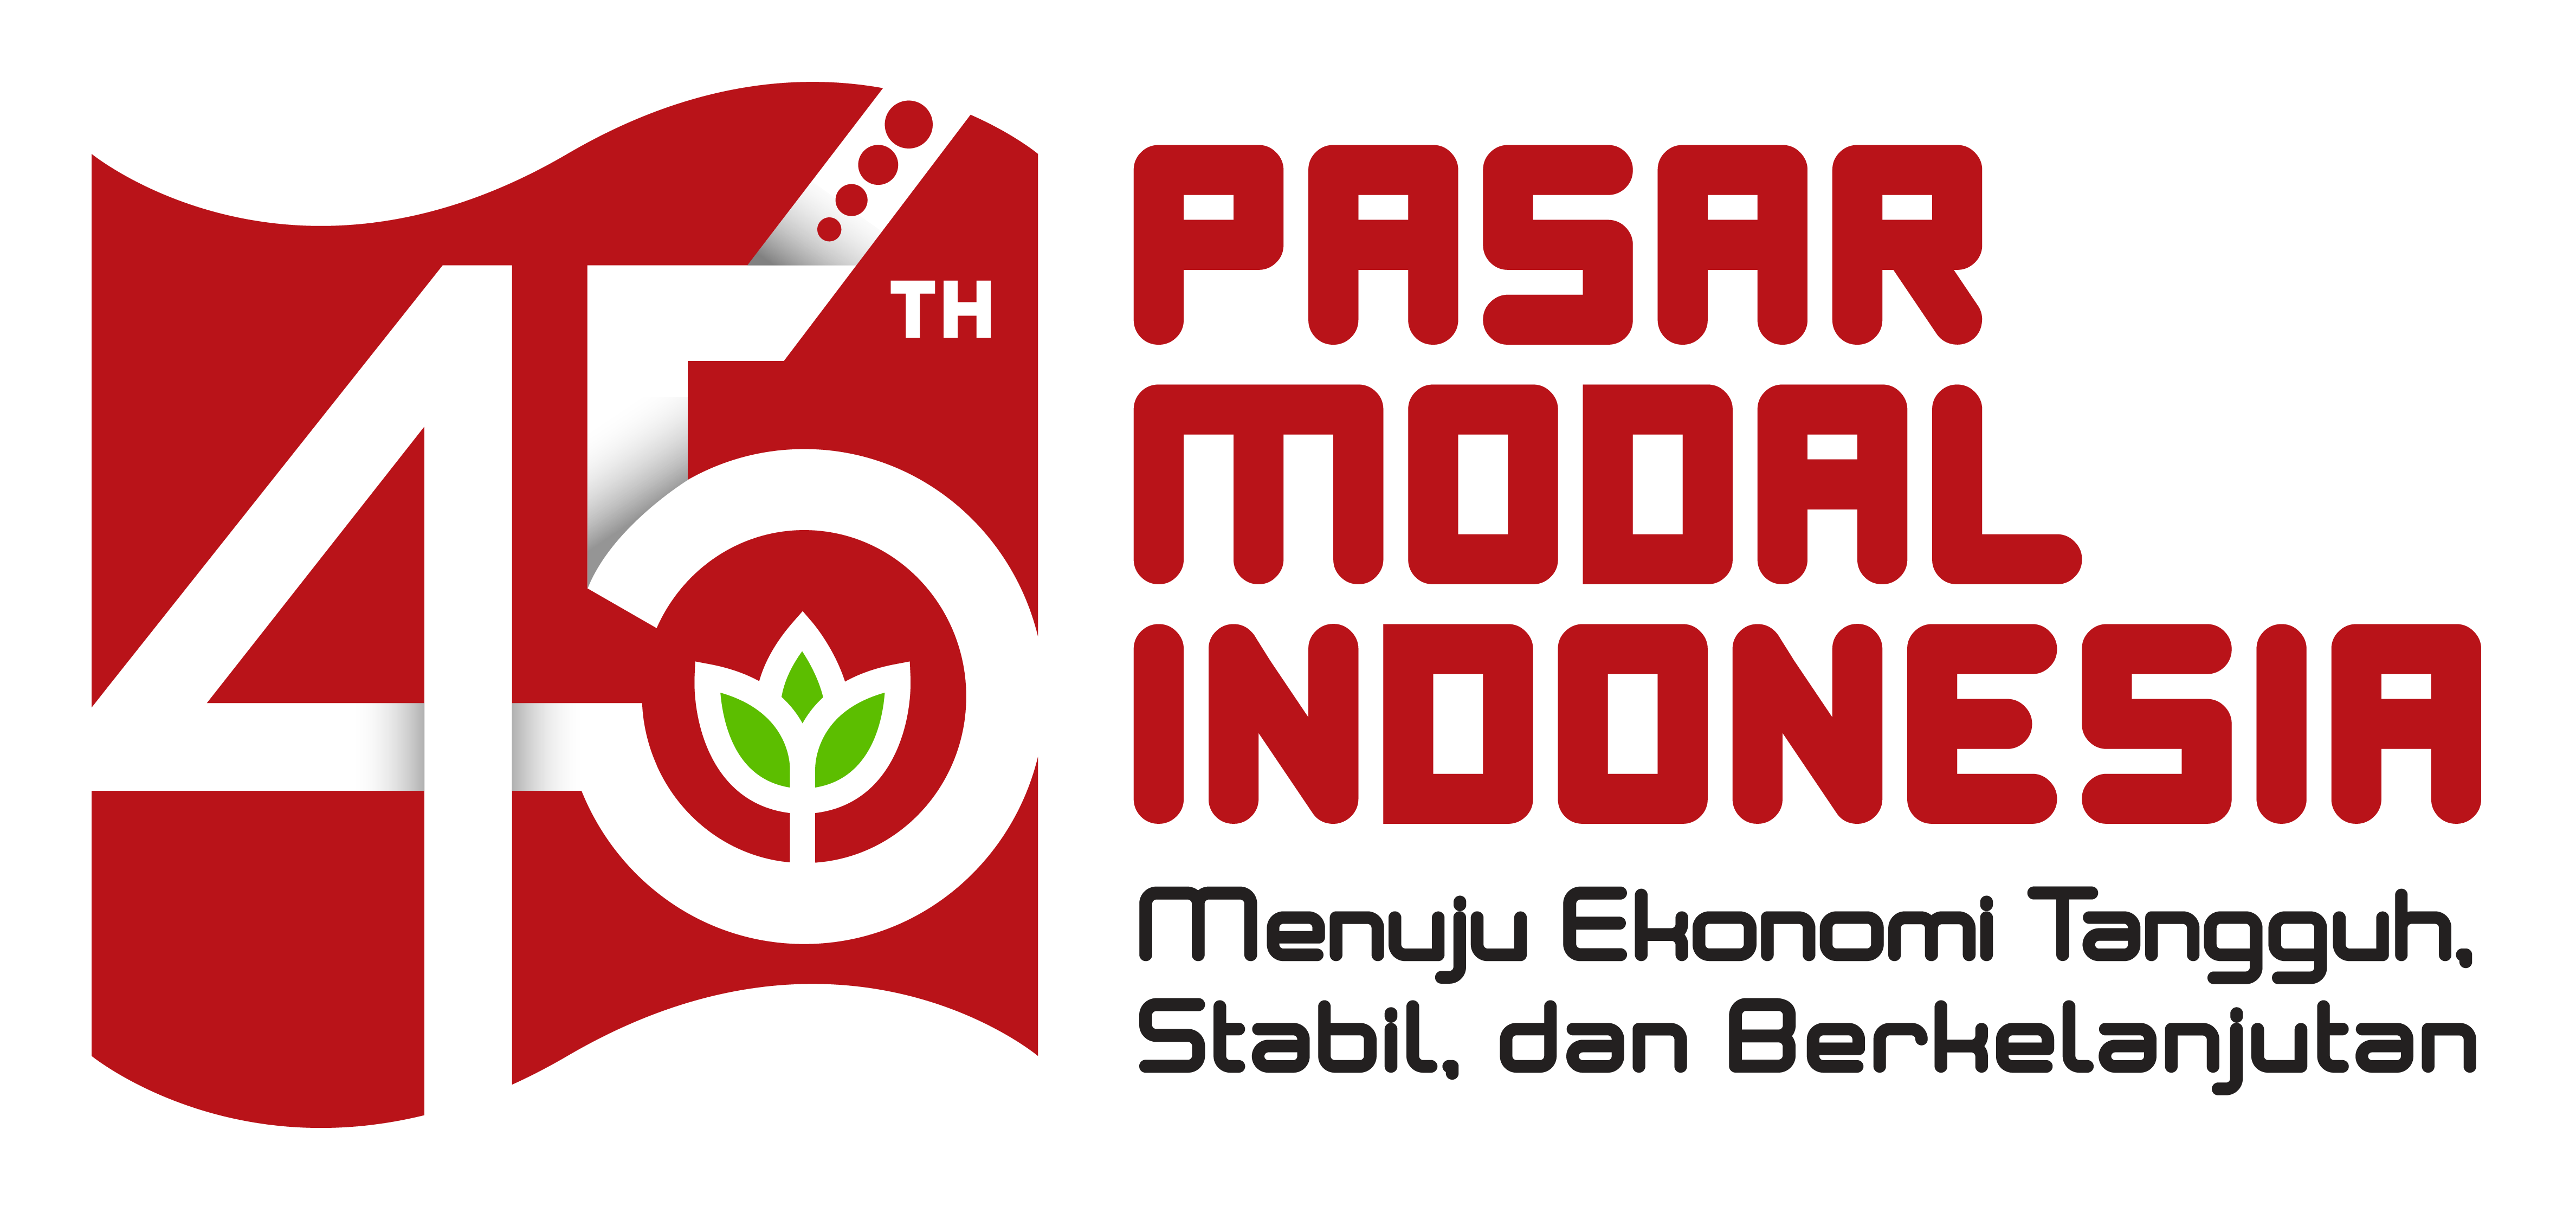 PASAR MODAL INDONESIA